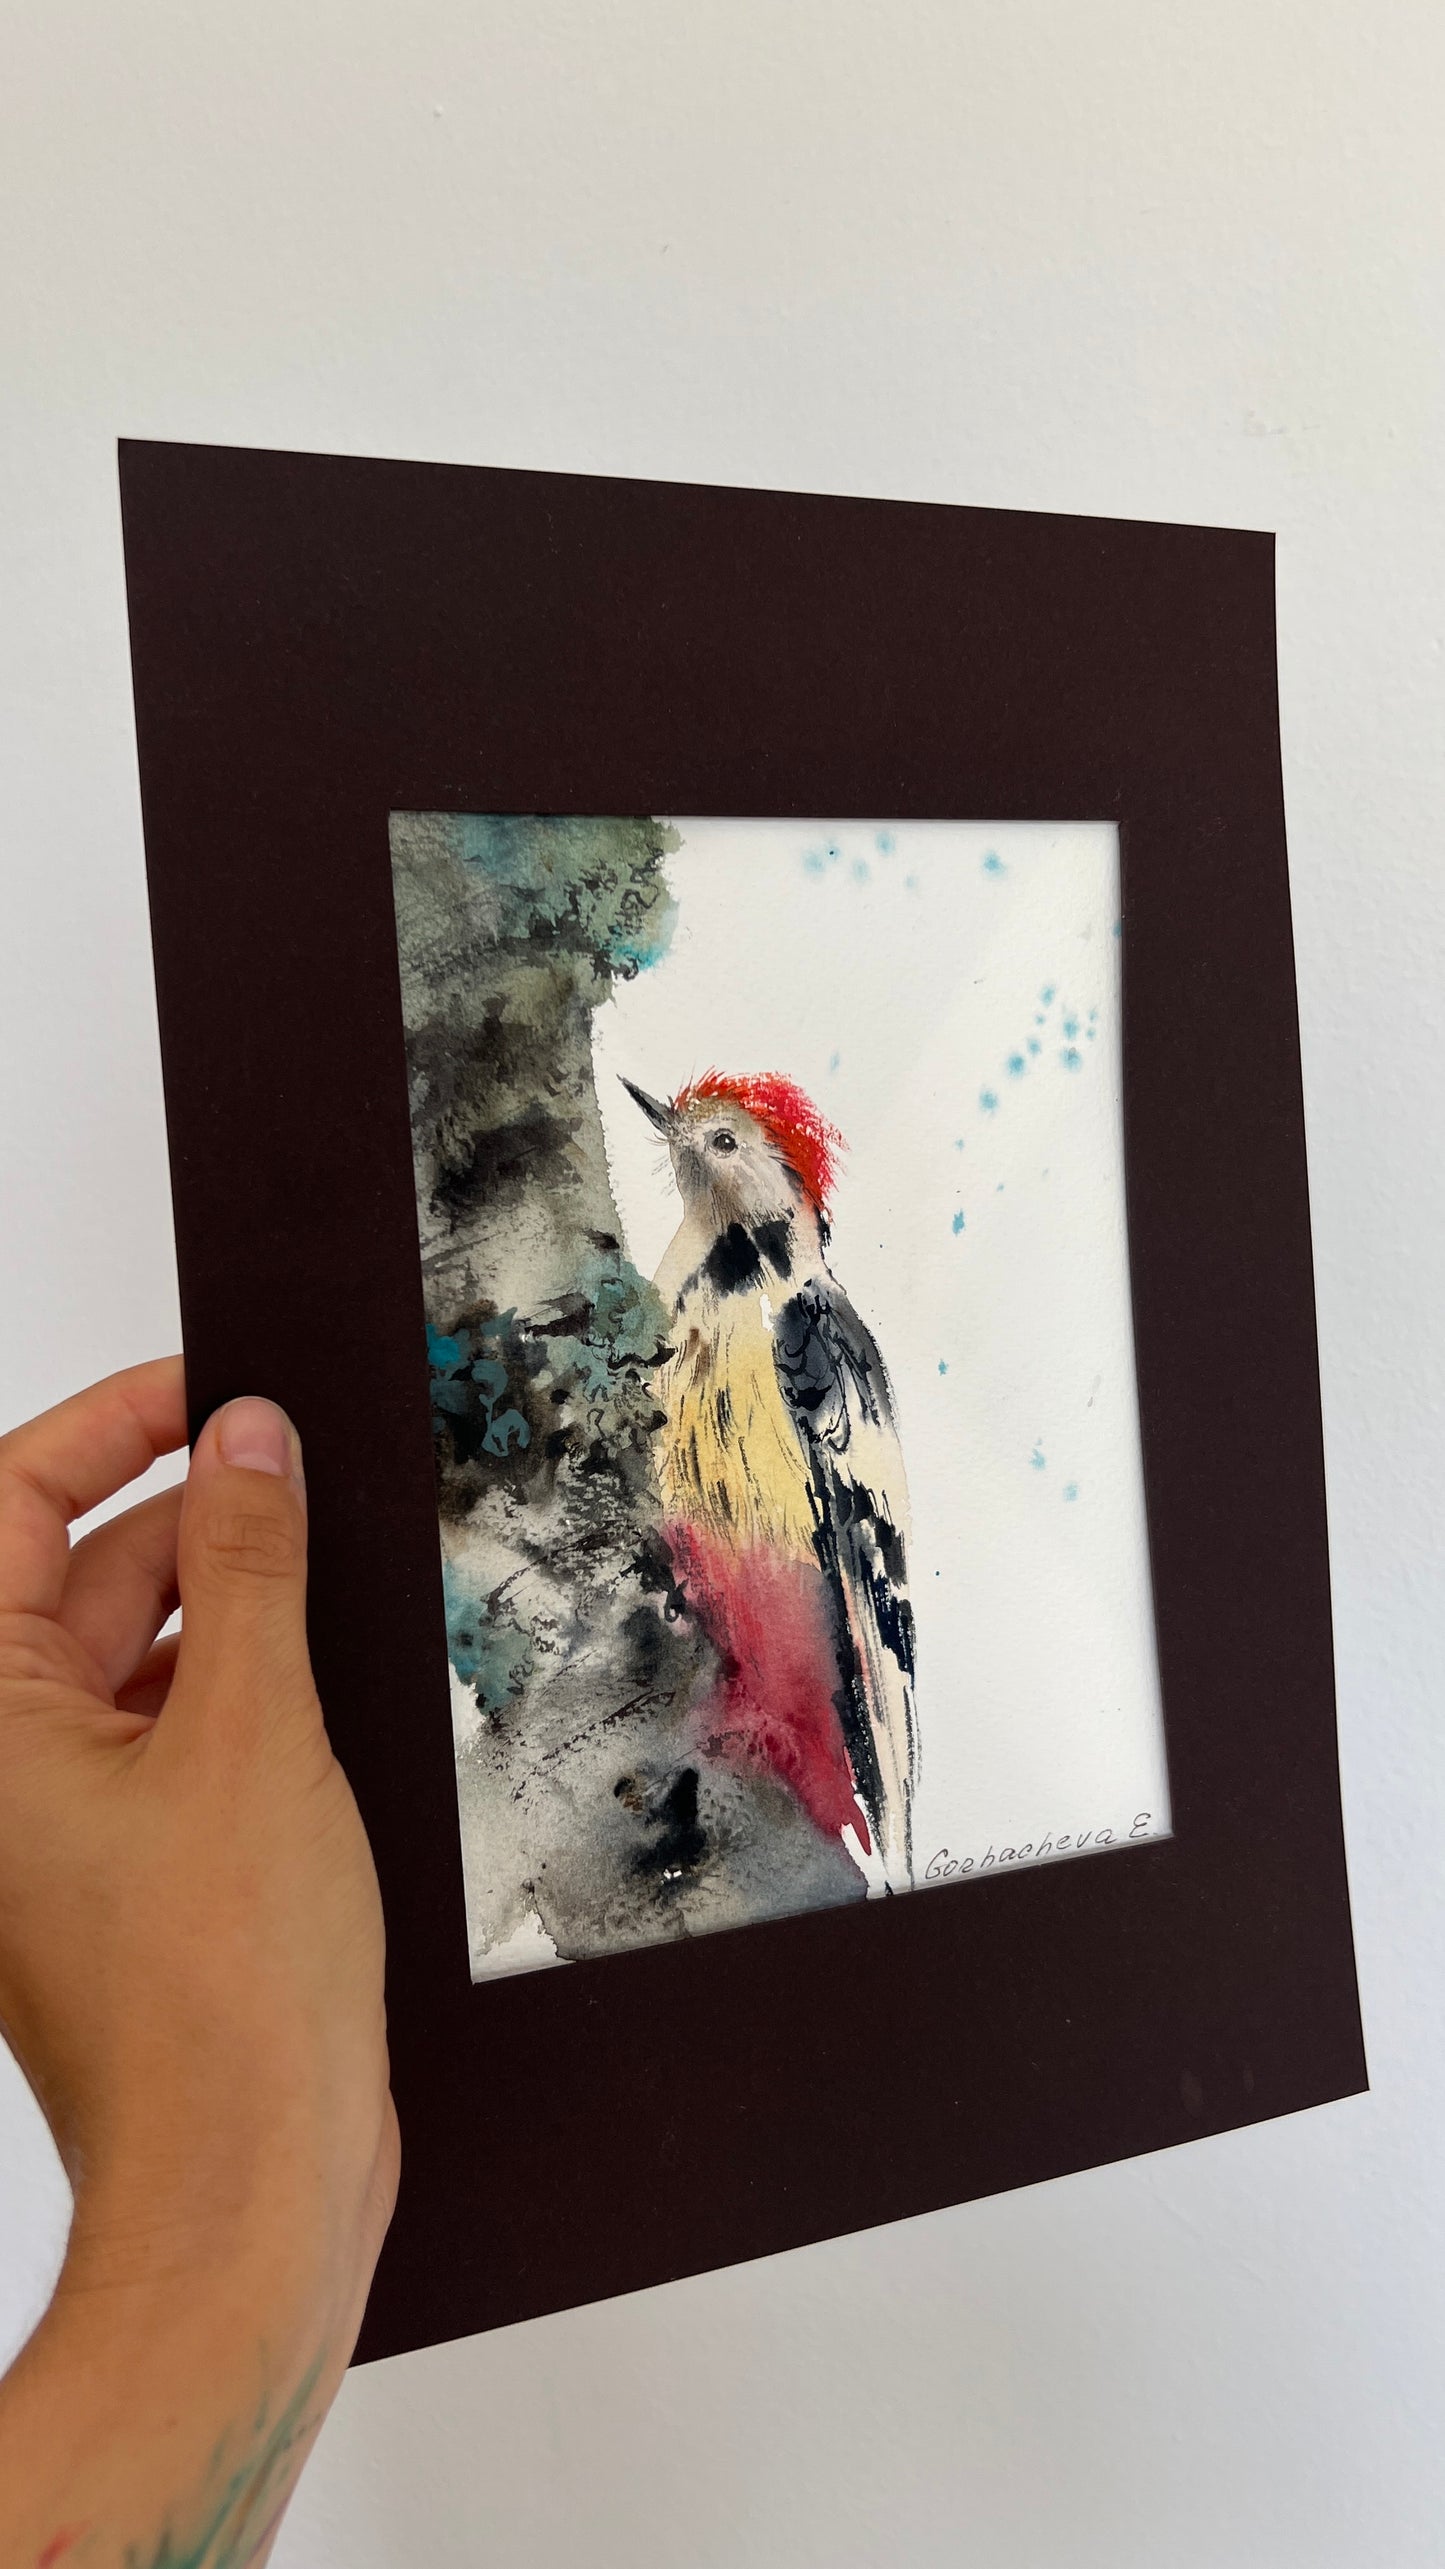 Woodpecker Watercolor Original Painting, Small Artwork, Wildlife Illustration, Gift For Mom, Living Room Wall Art